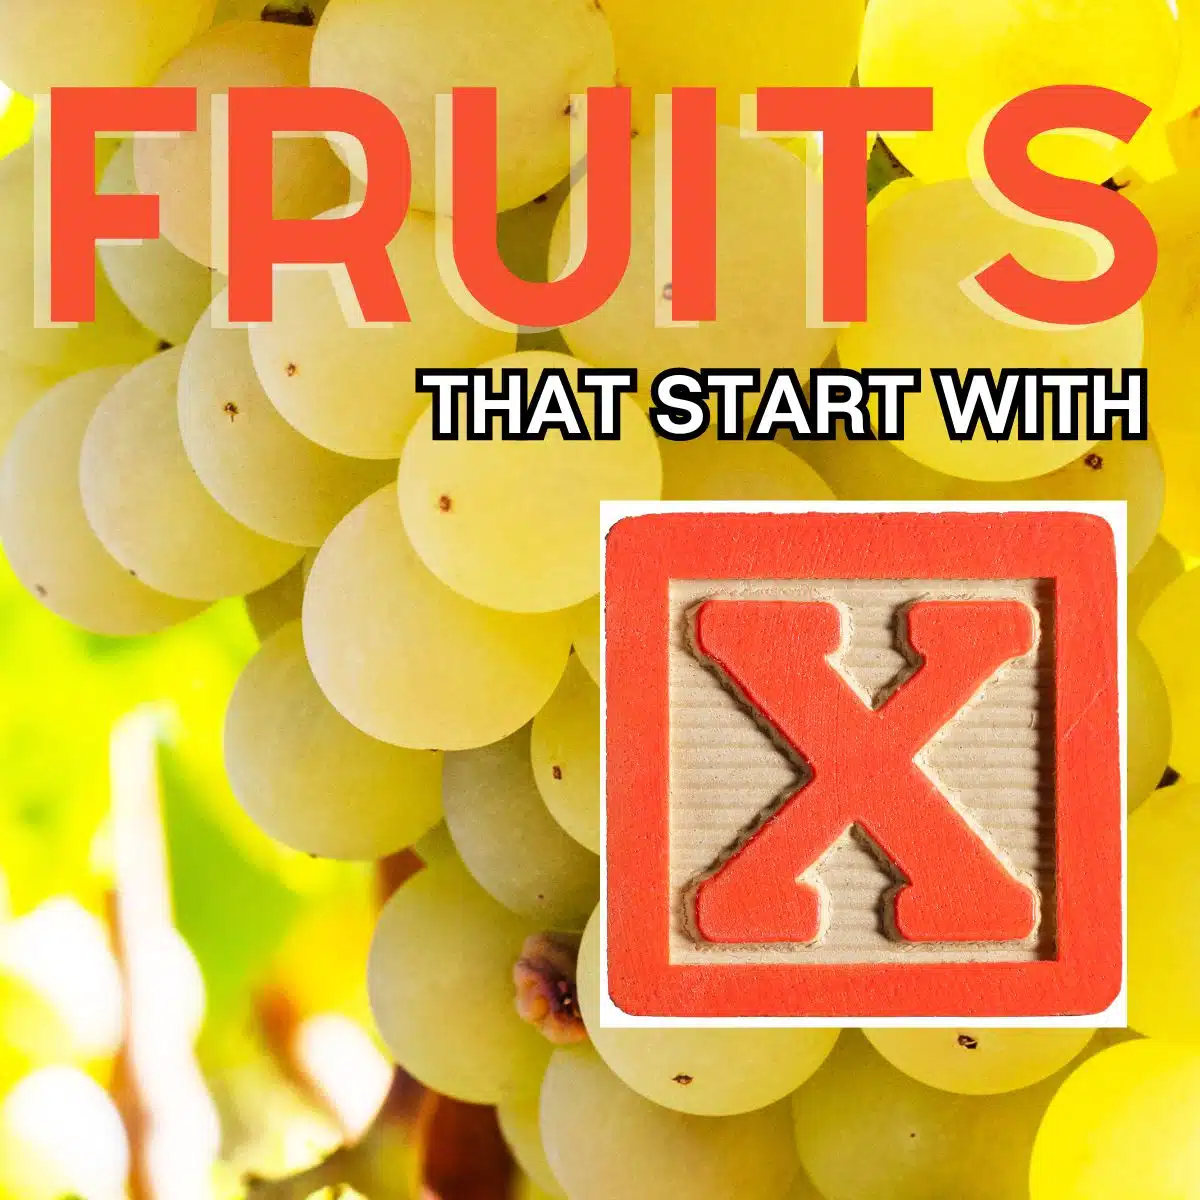 Gambar persegi untuk buah-buahan yang dimulai dengan huruf x, menampilkan anggur Xarel-lo.